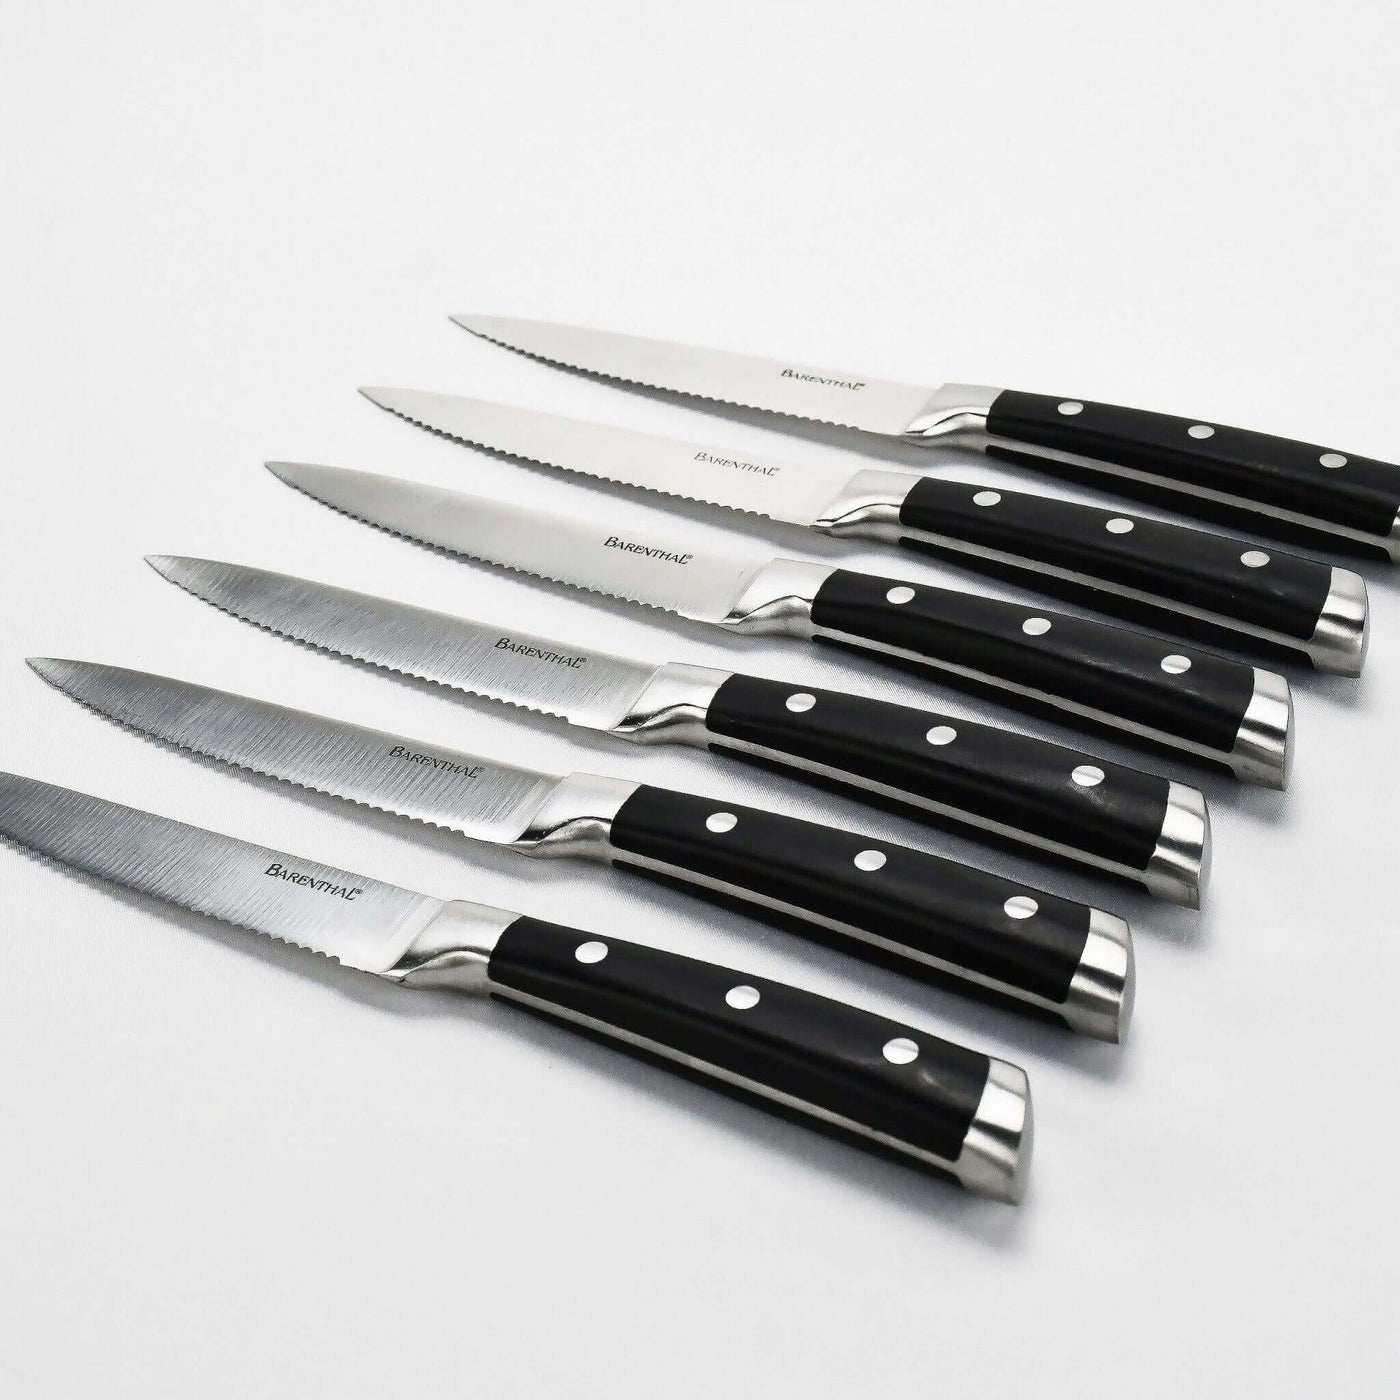 Barenthal 6-pc. 18/10 German Stainless Steel Steak Knife Set with Velvet-Lined Storage Case